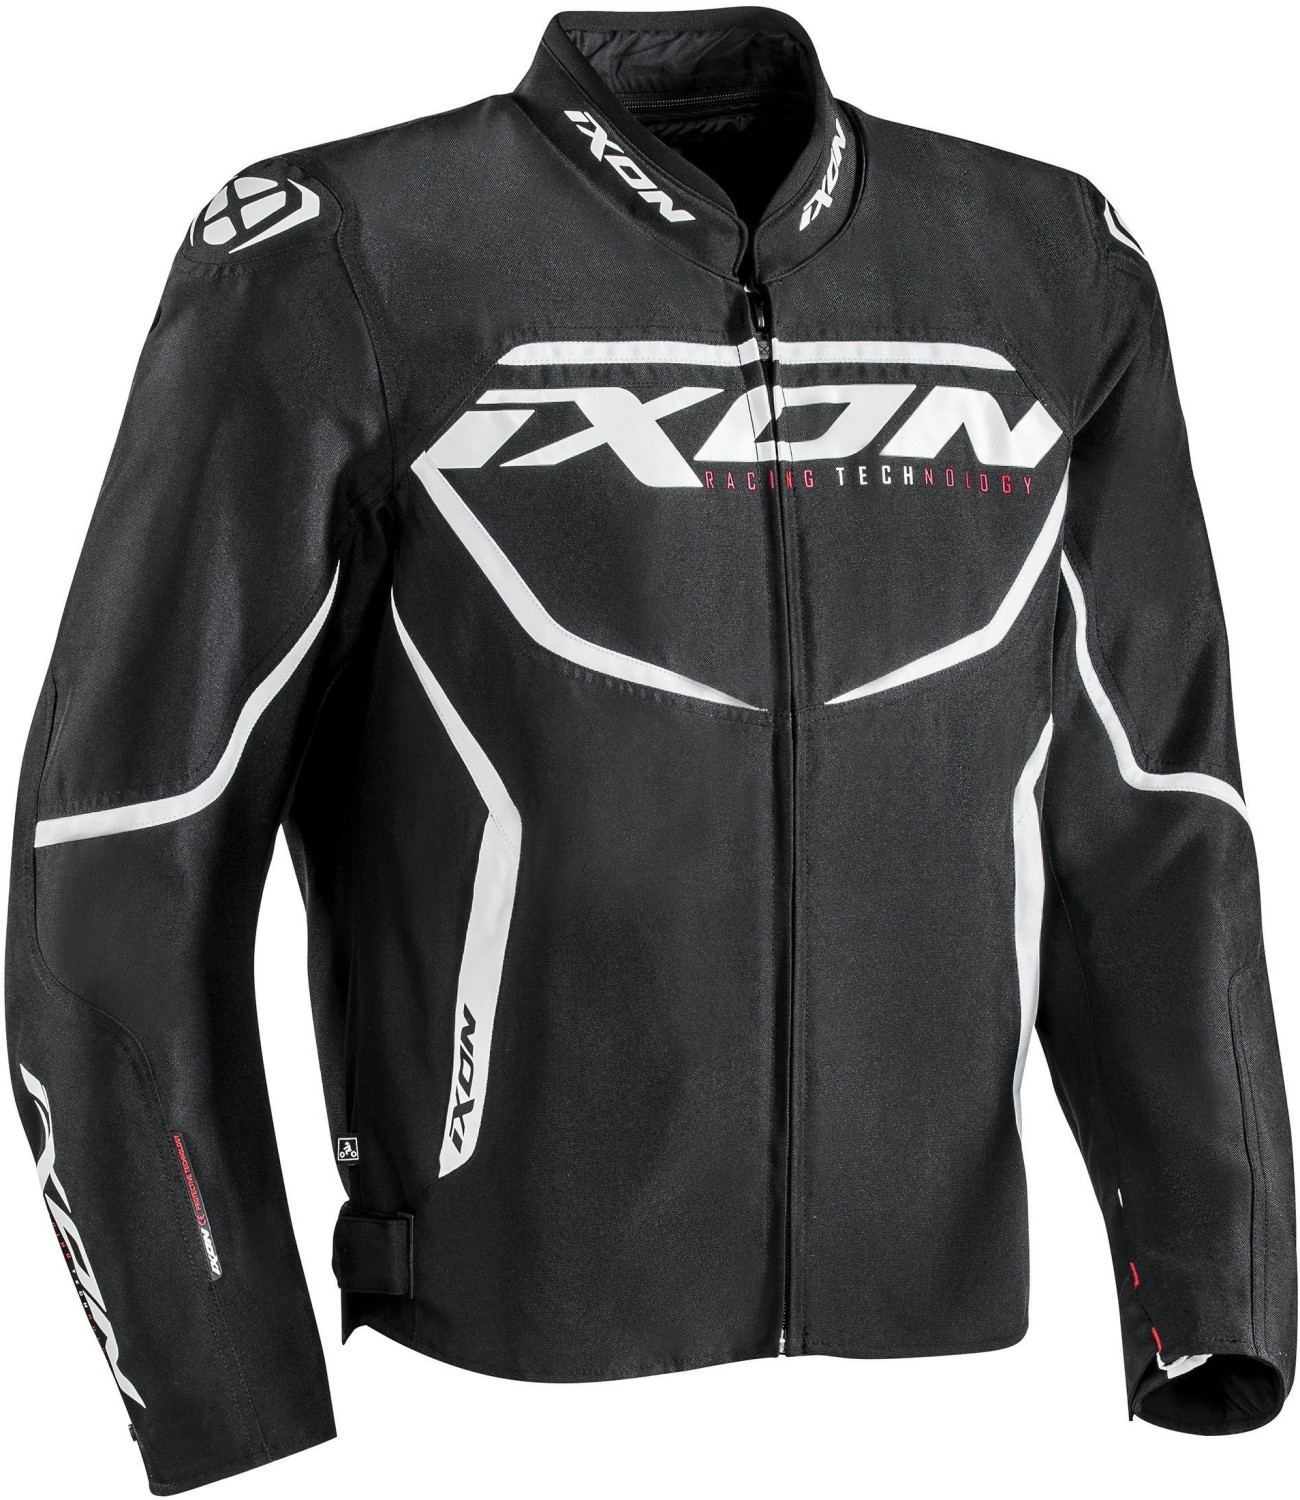 Buy IXON Sprinter Jacket Black/White from £91.03 (Today) – Best Deals ...